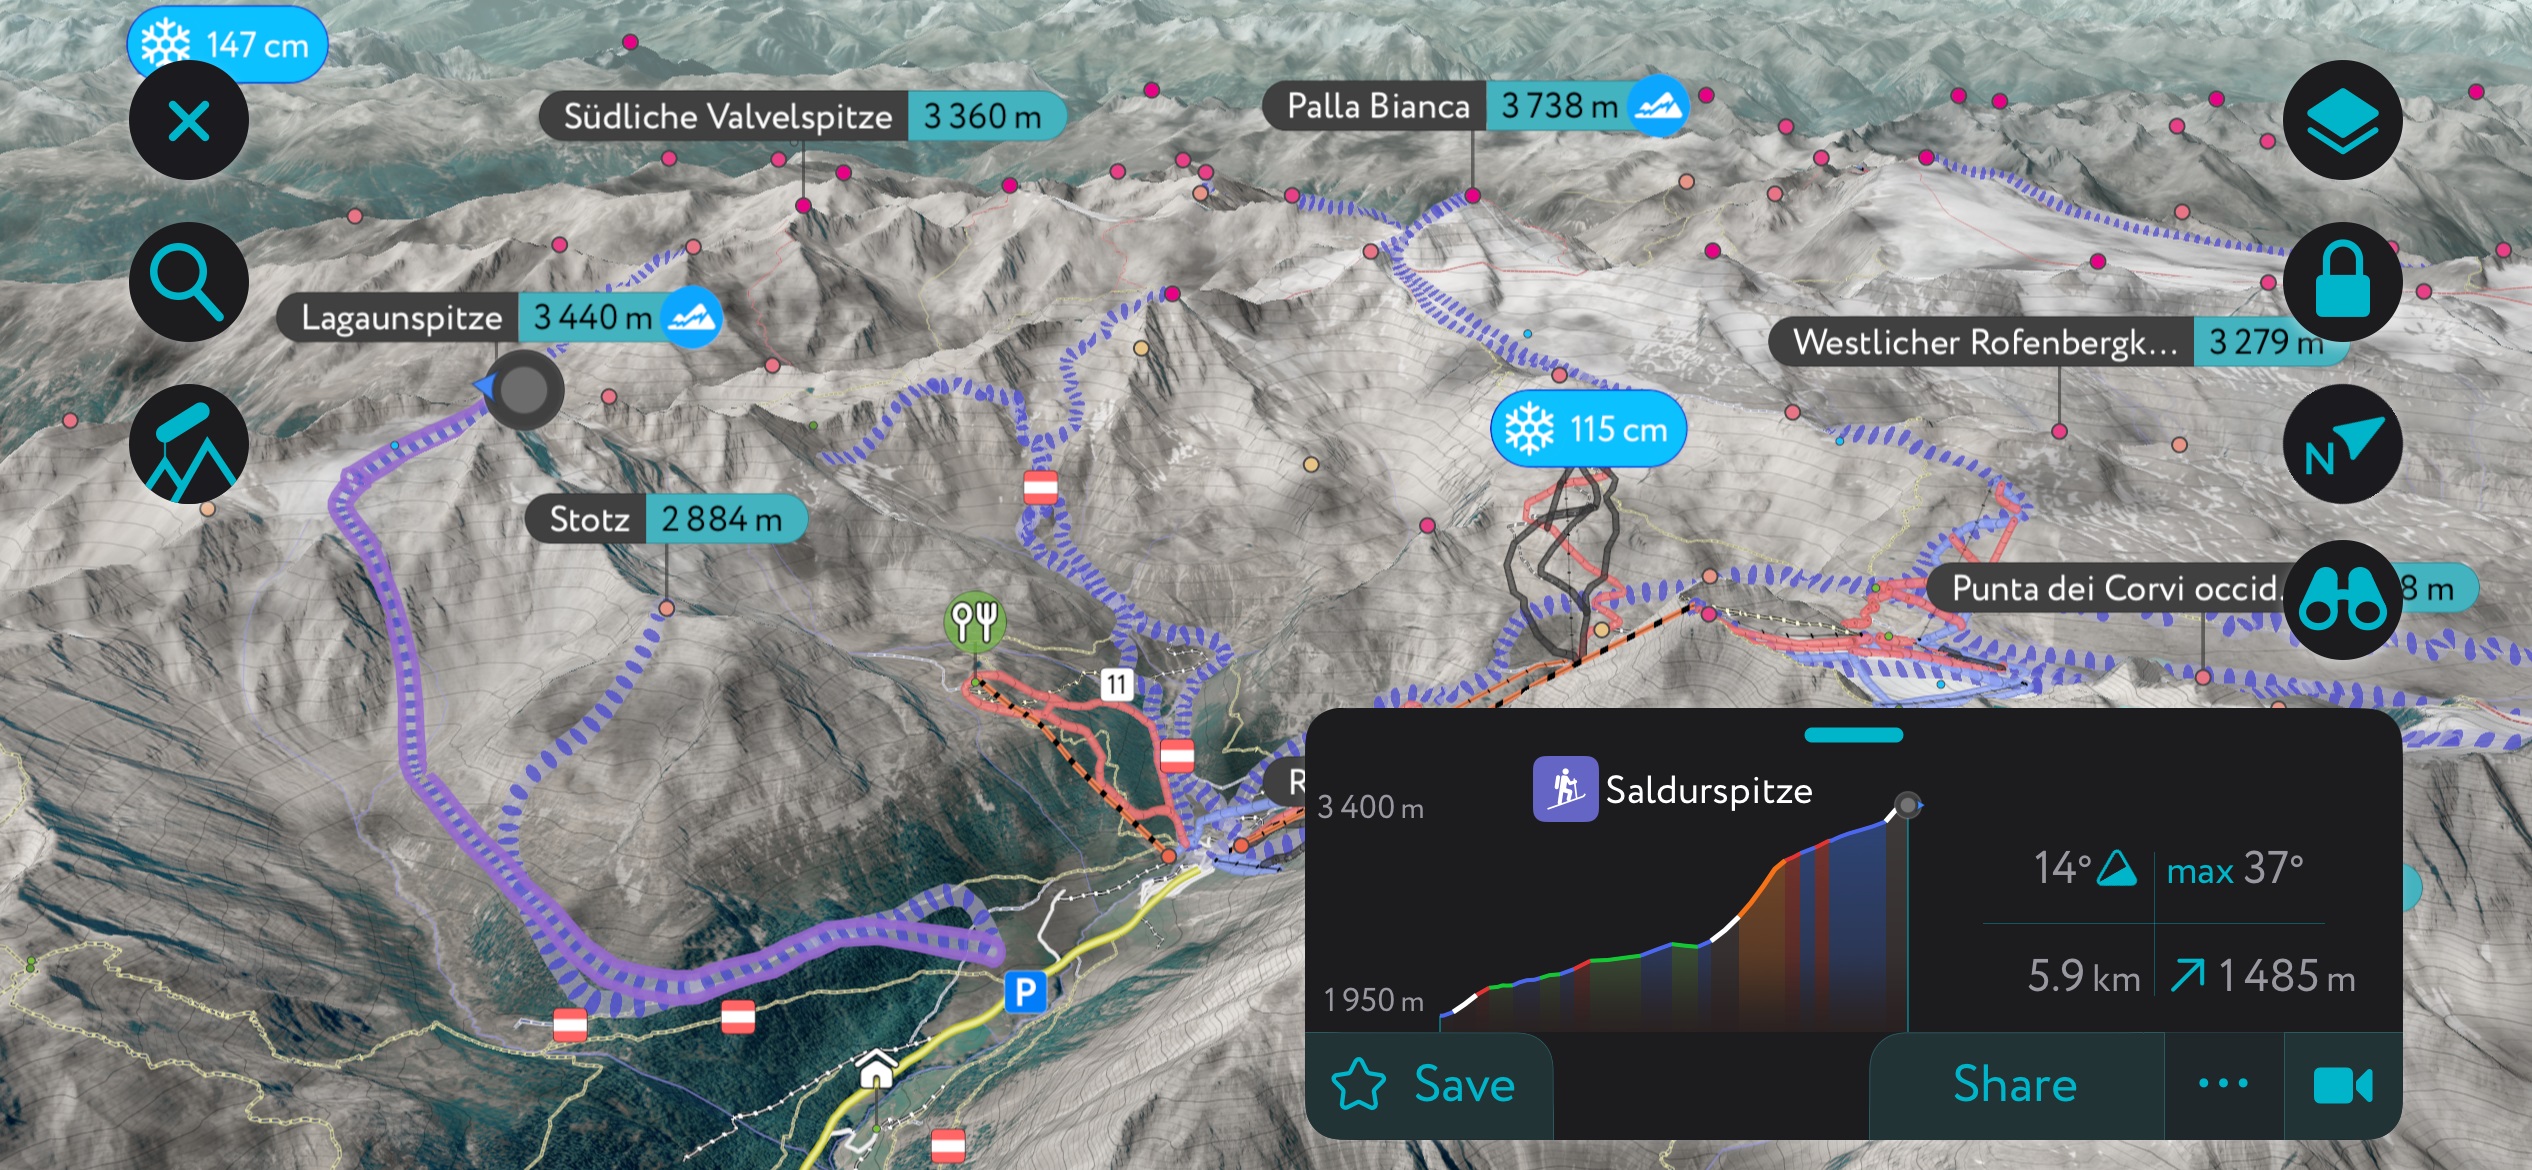 The ski route up Saldurspitze (Option 1) on the PeakVisor app in winter mode. Saldurkamm